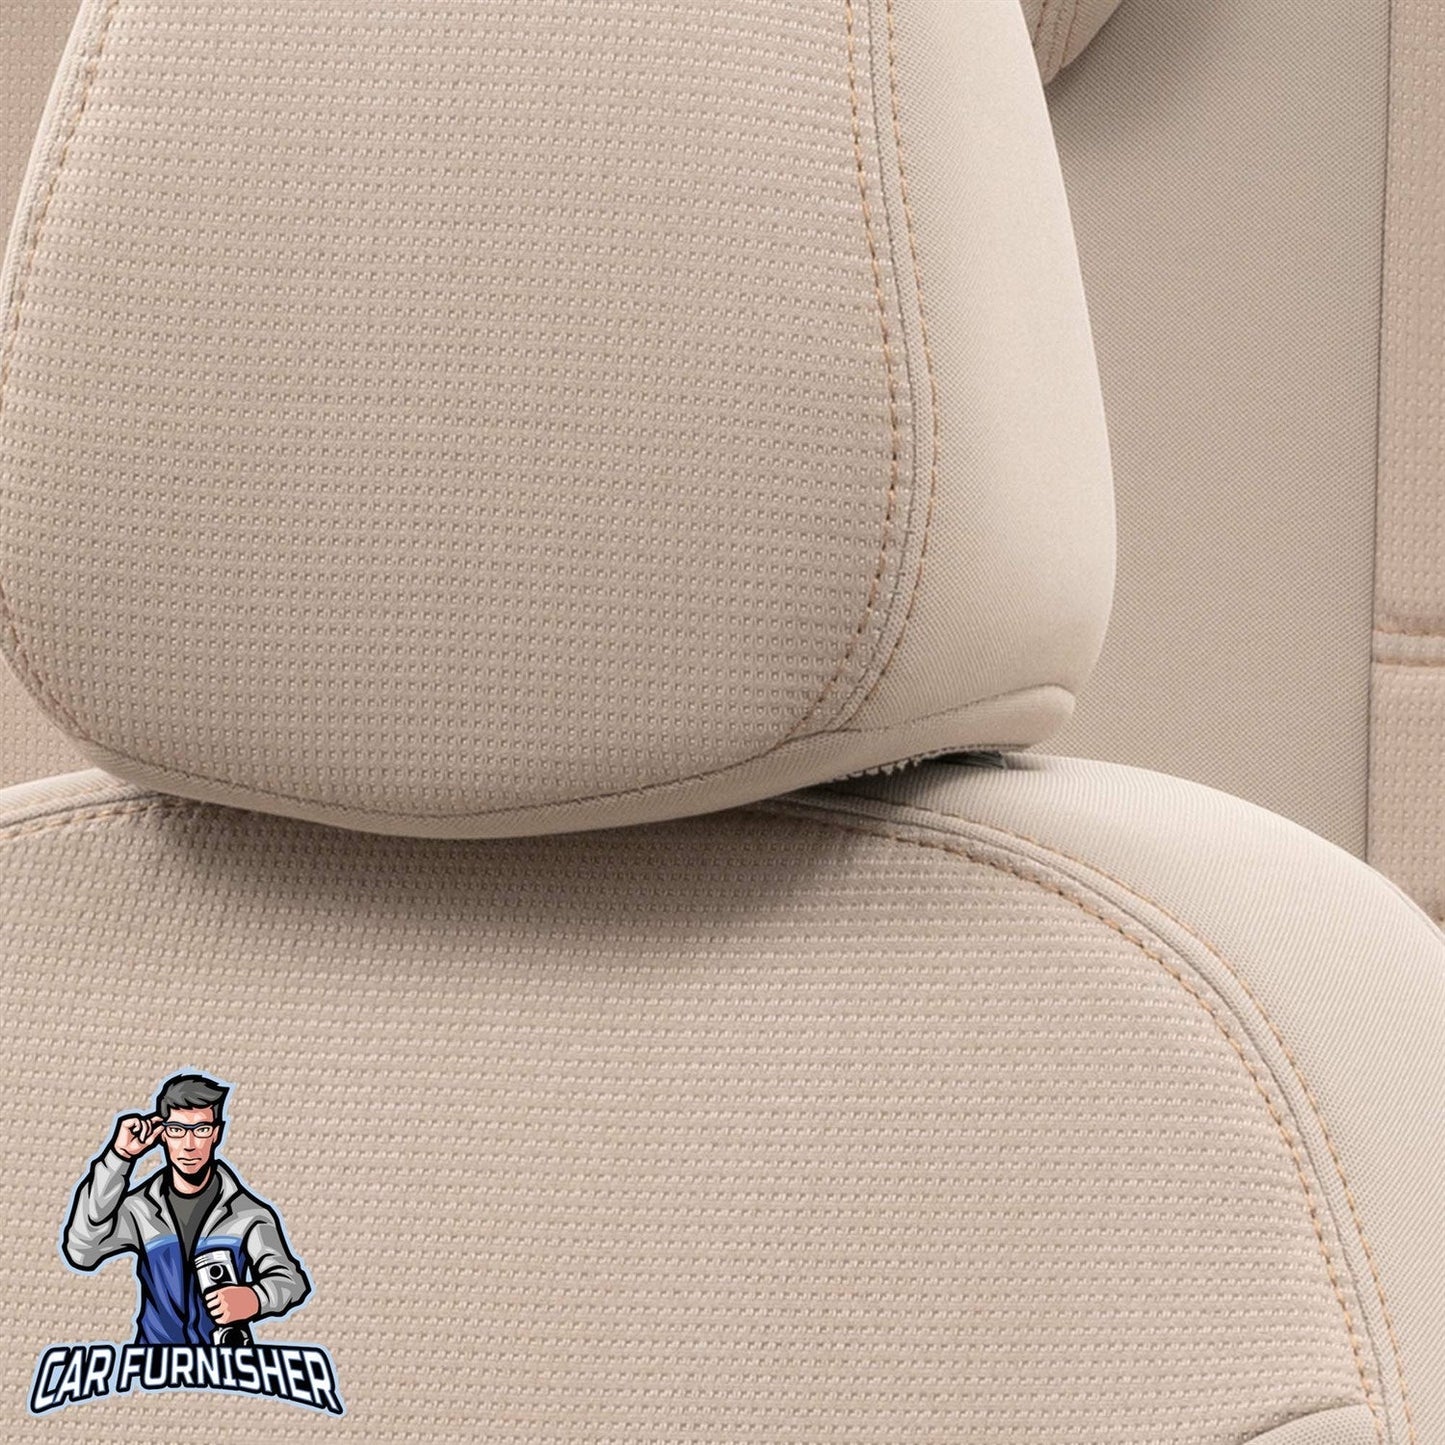 Fiat 500 Seat Covers Original Jacquard Design Beige Jacquard Fabric